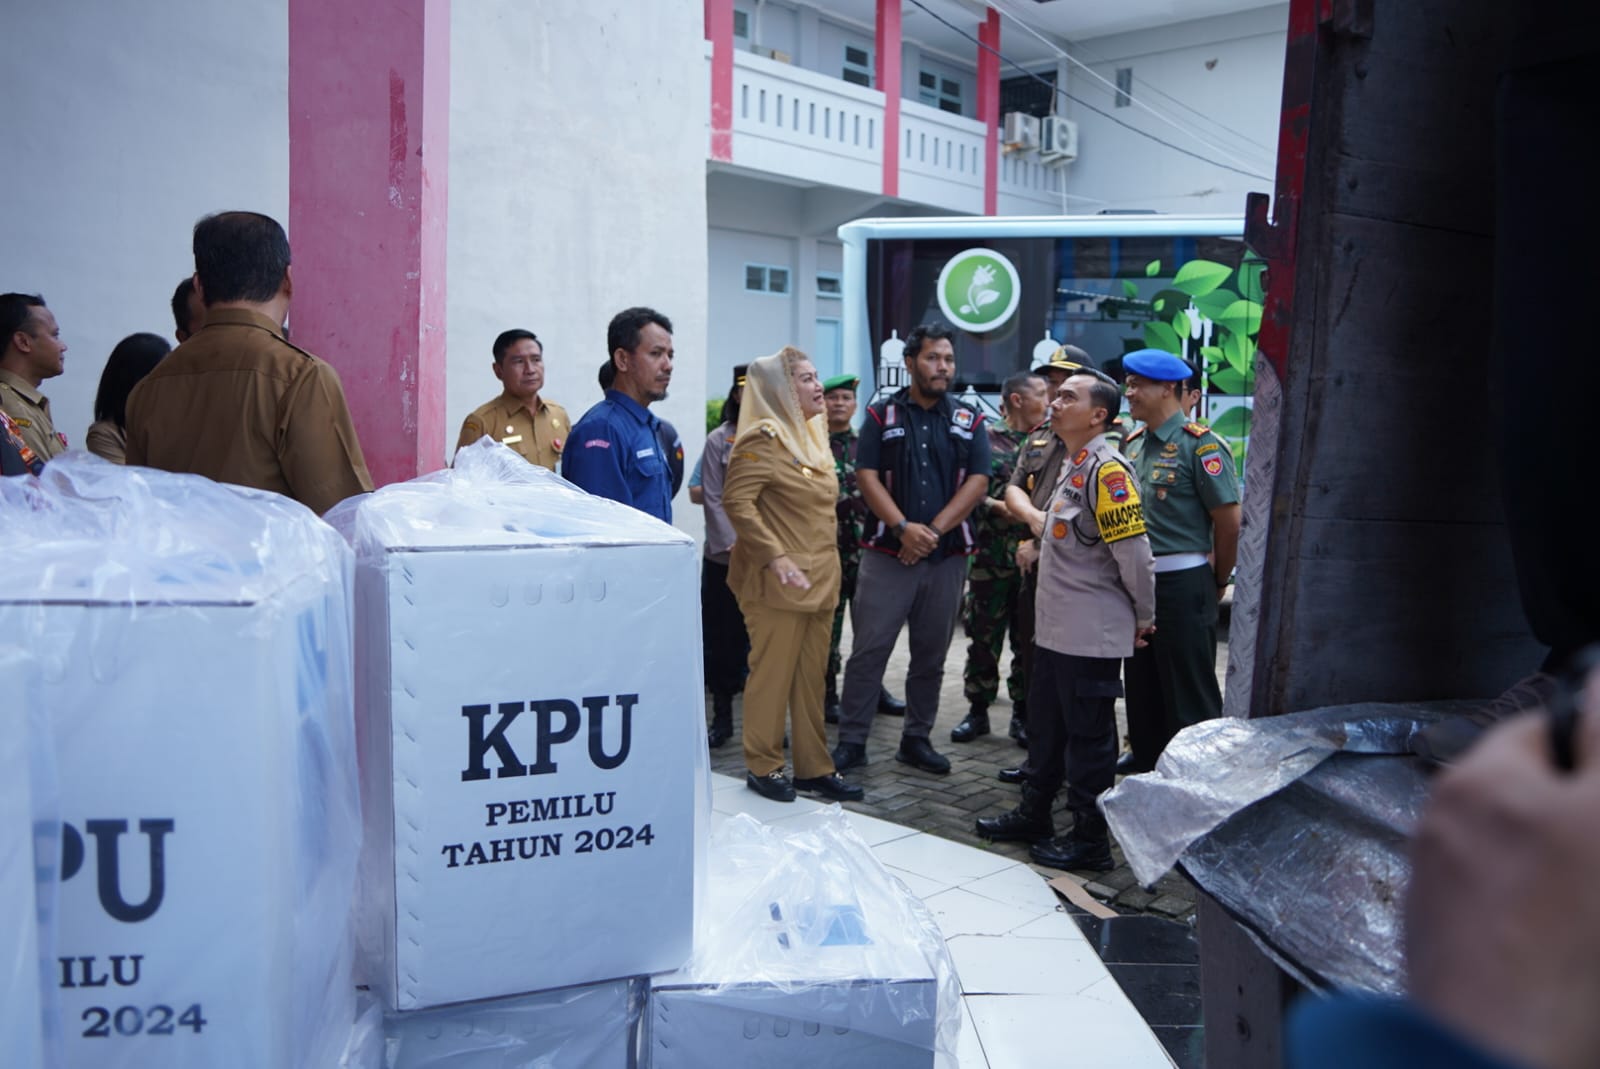 Wali Kota Semarang, Hevearita Gunaryanti Rahayu saat melaksanakan kegiatan pengecekan distribusi logistik Pemilu di GOR Manunggal Jati, Kota Semarang, Senin (12/2).